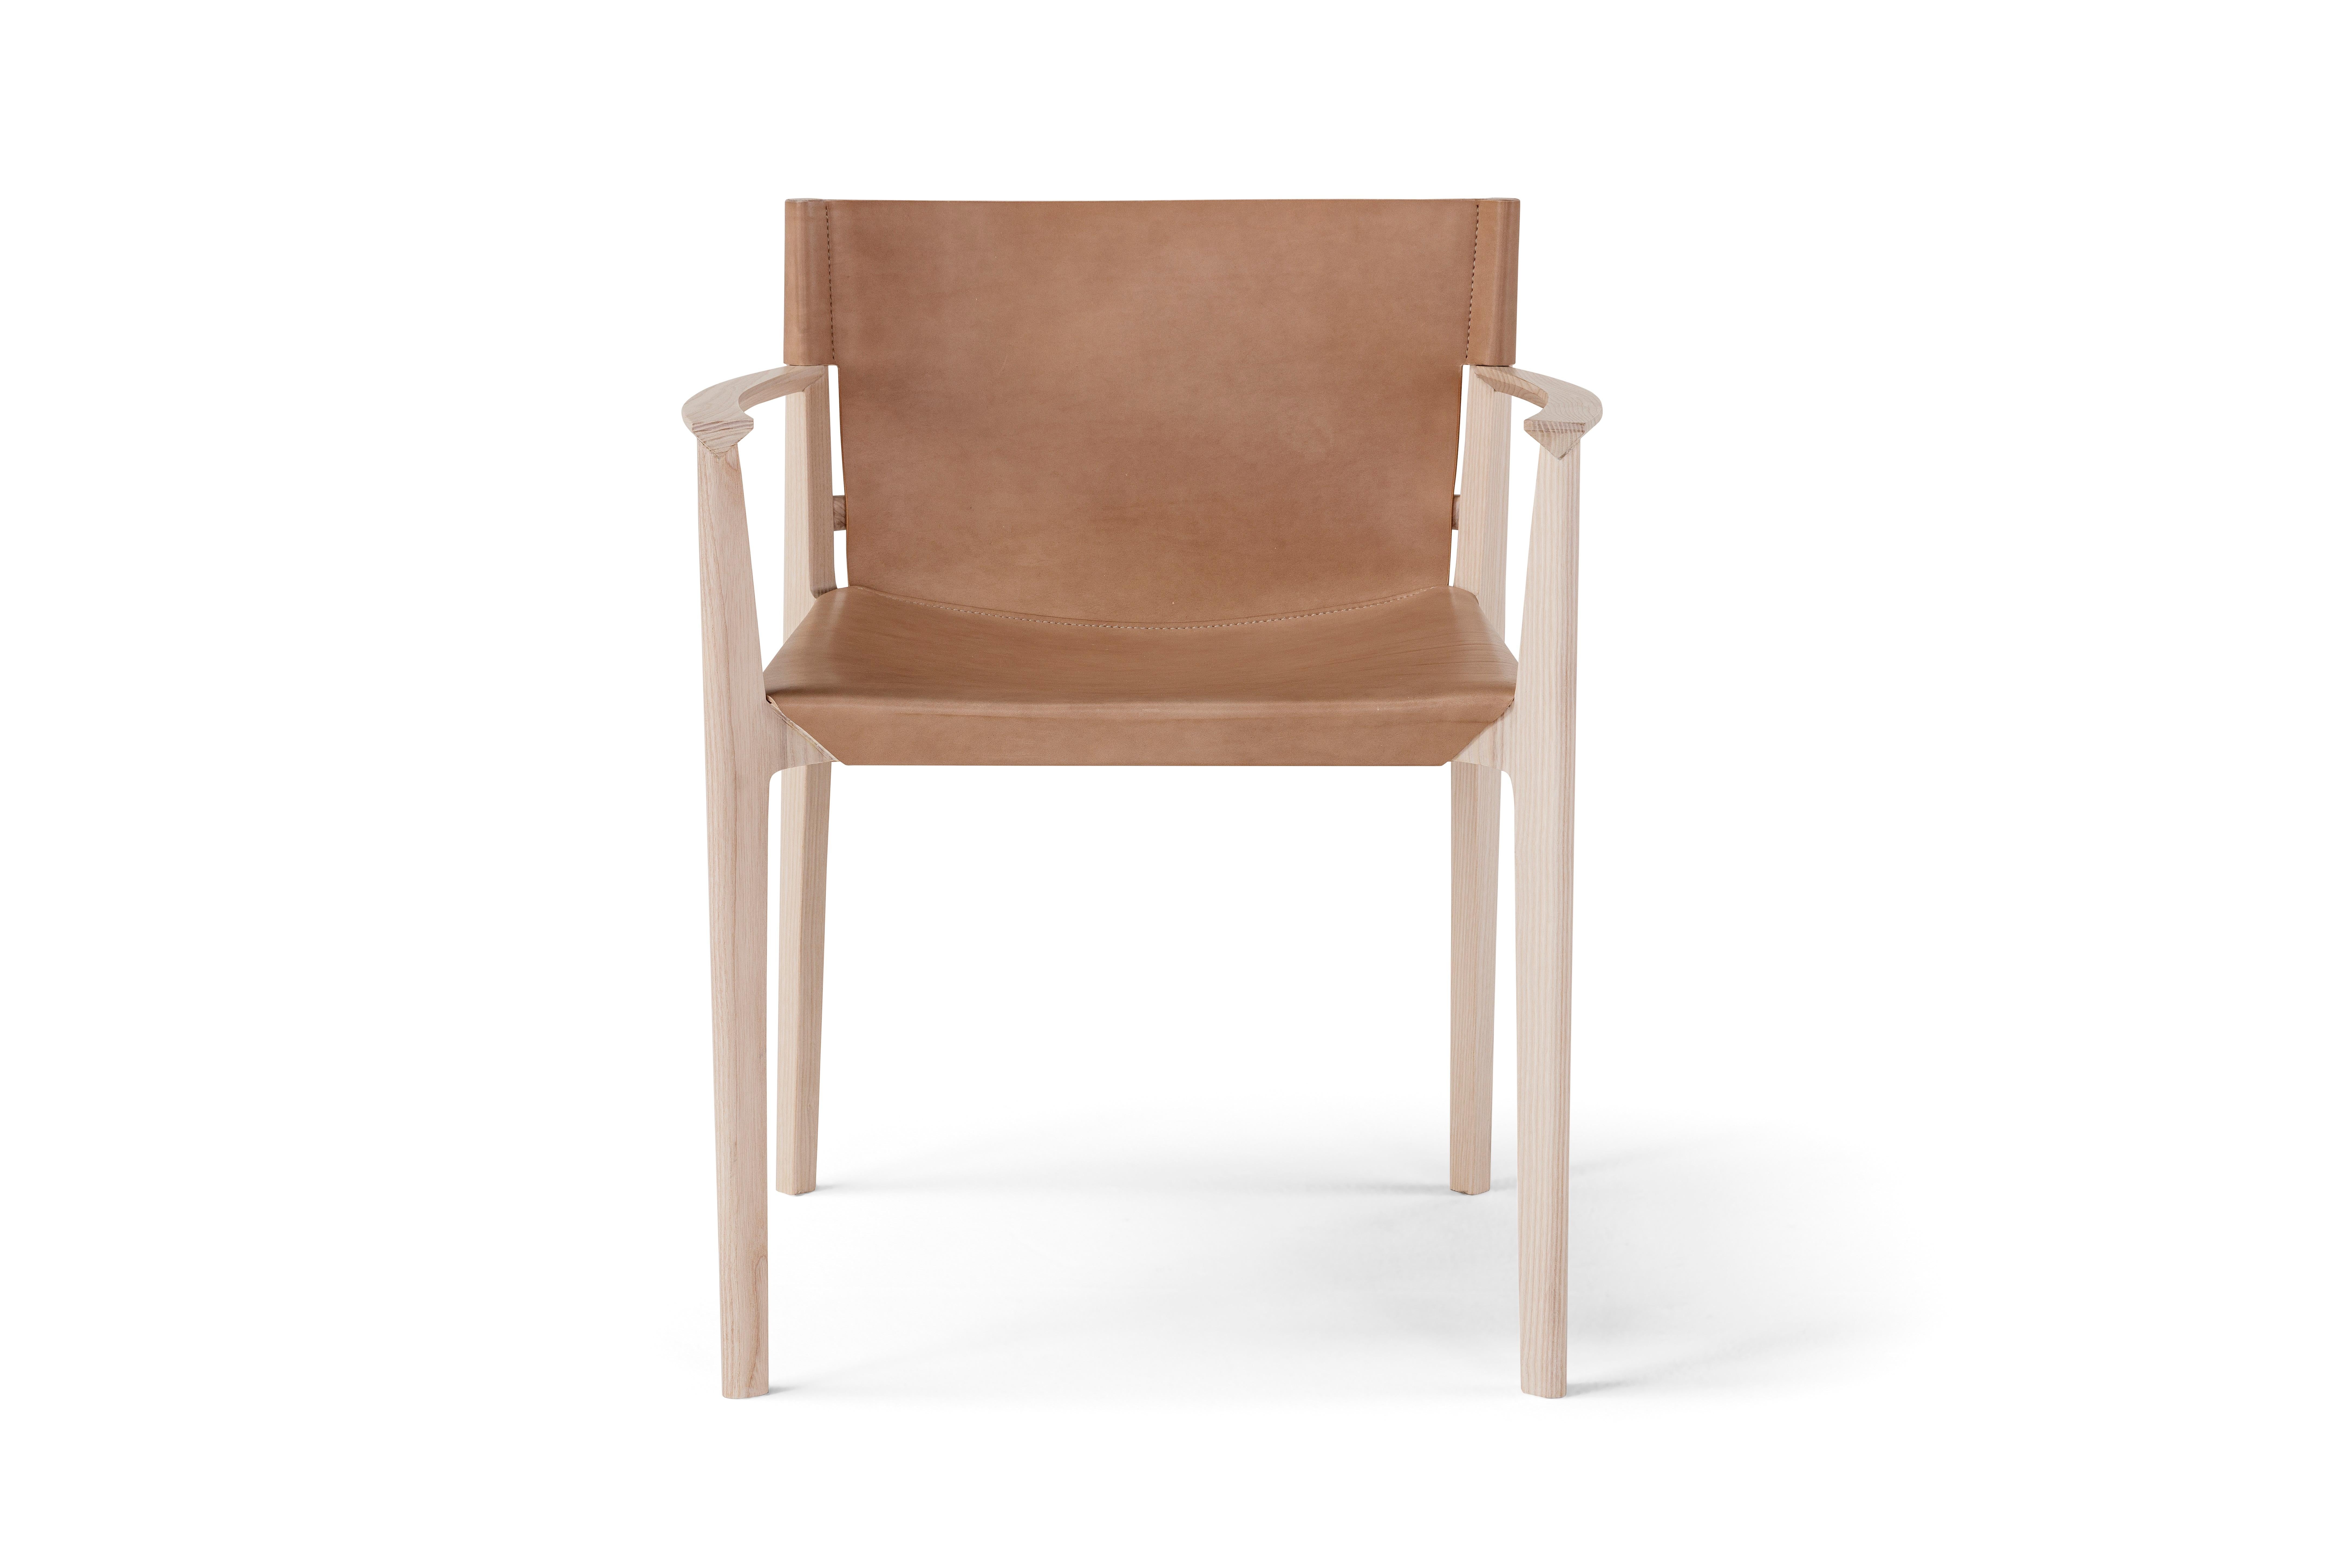 Organic Modern Contemporary Wooden Chair 'Stilt', Cuoio For Sale